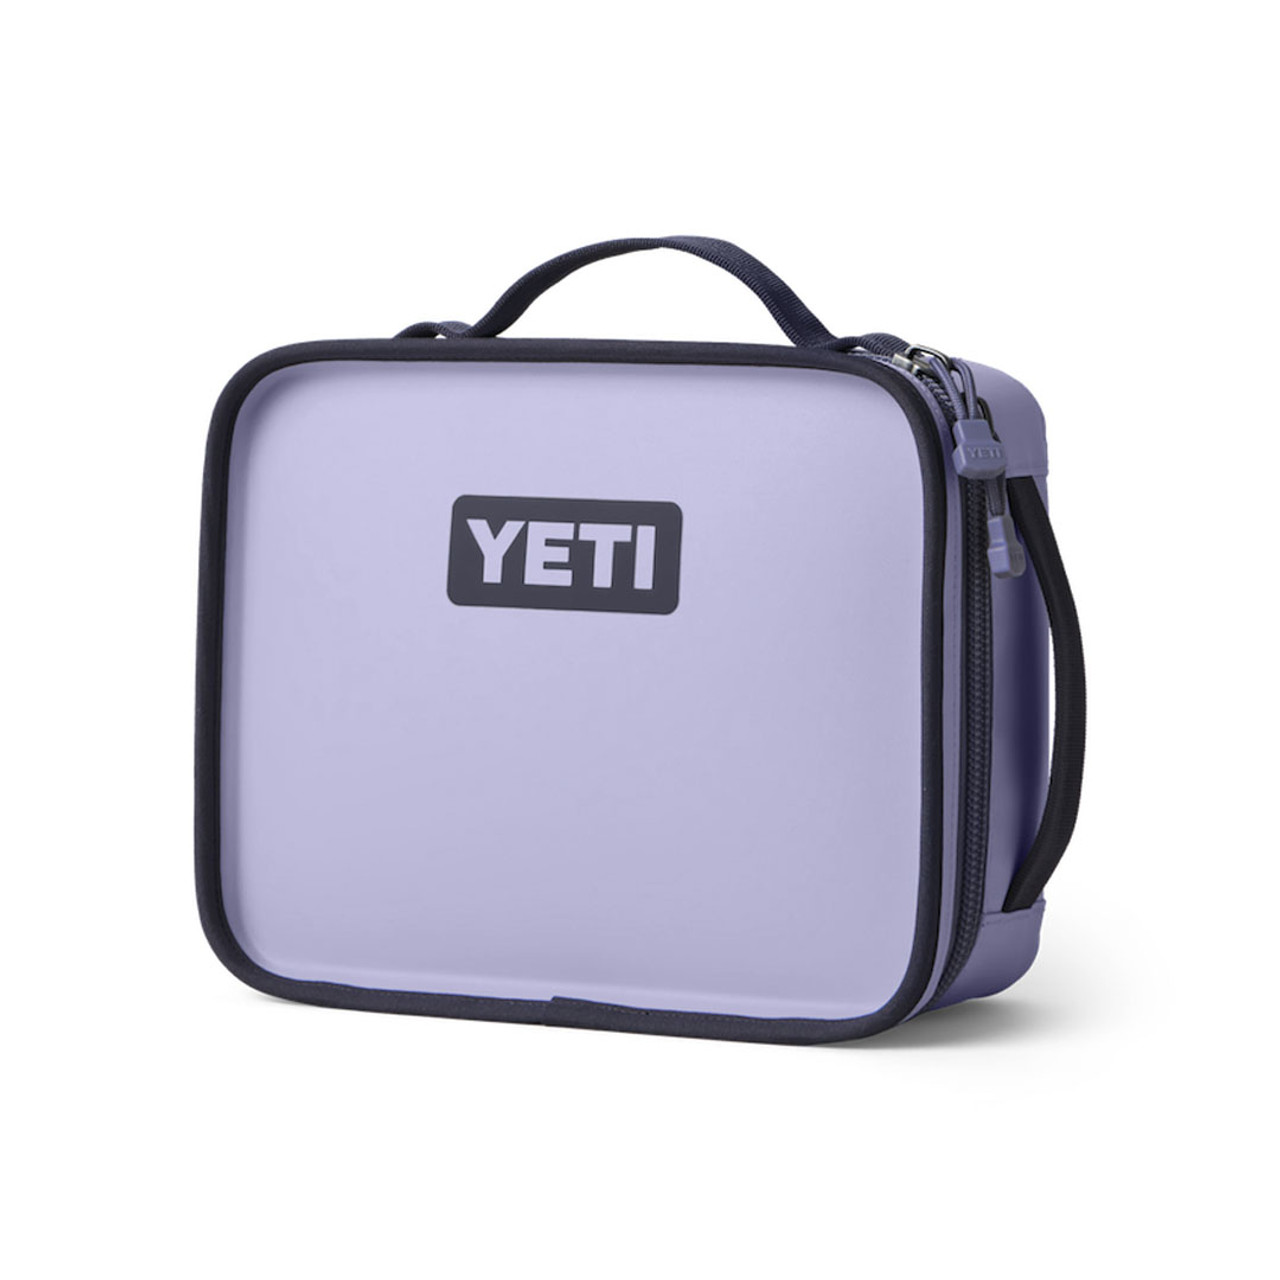 YETI Daytrip Lunch Box Charcoal - Free Shipping